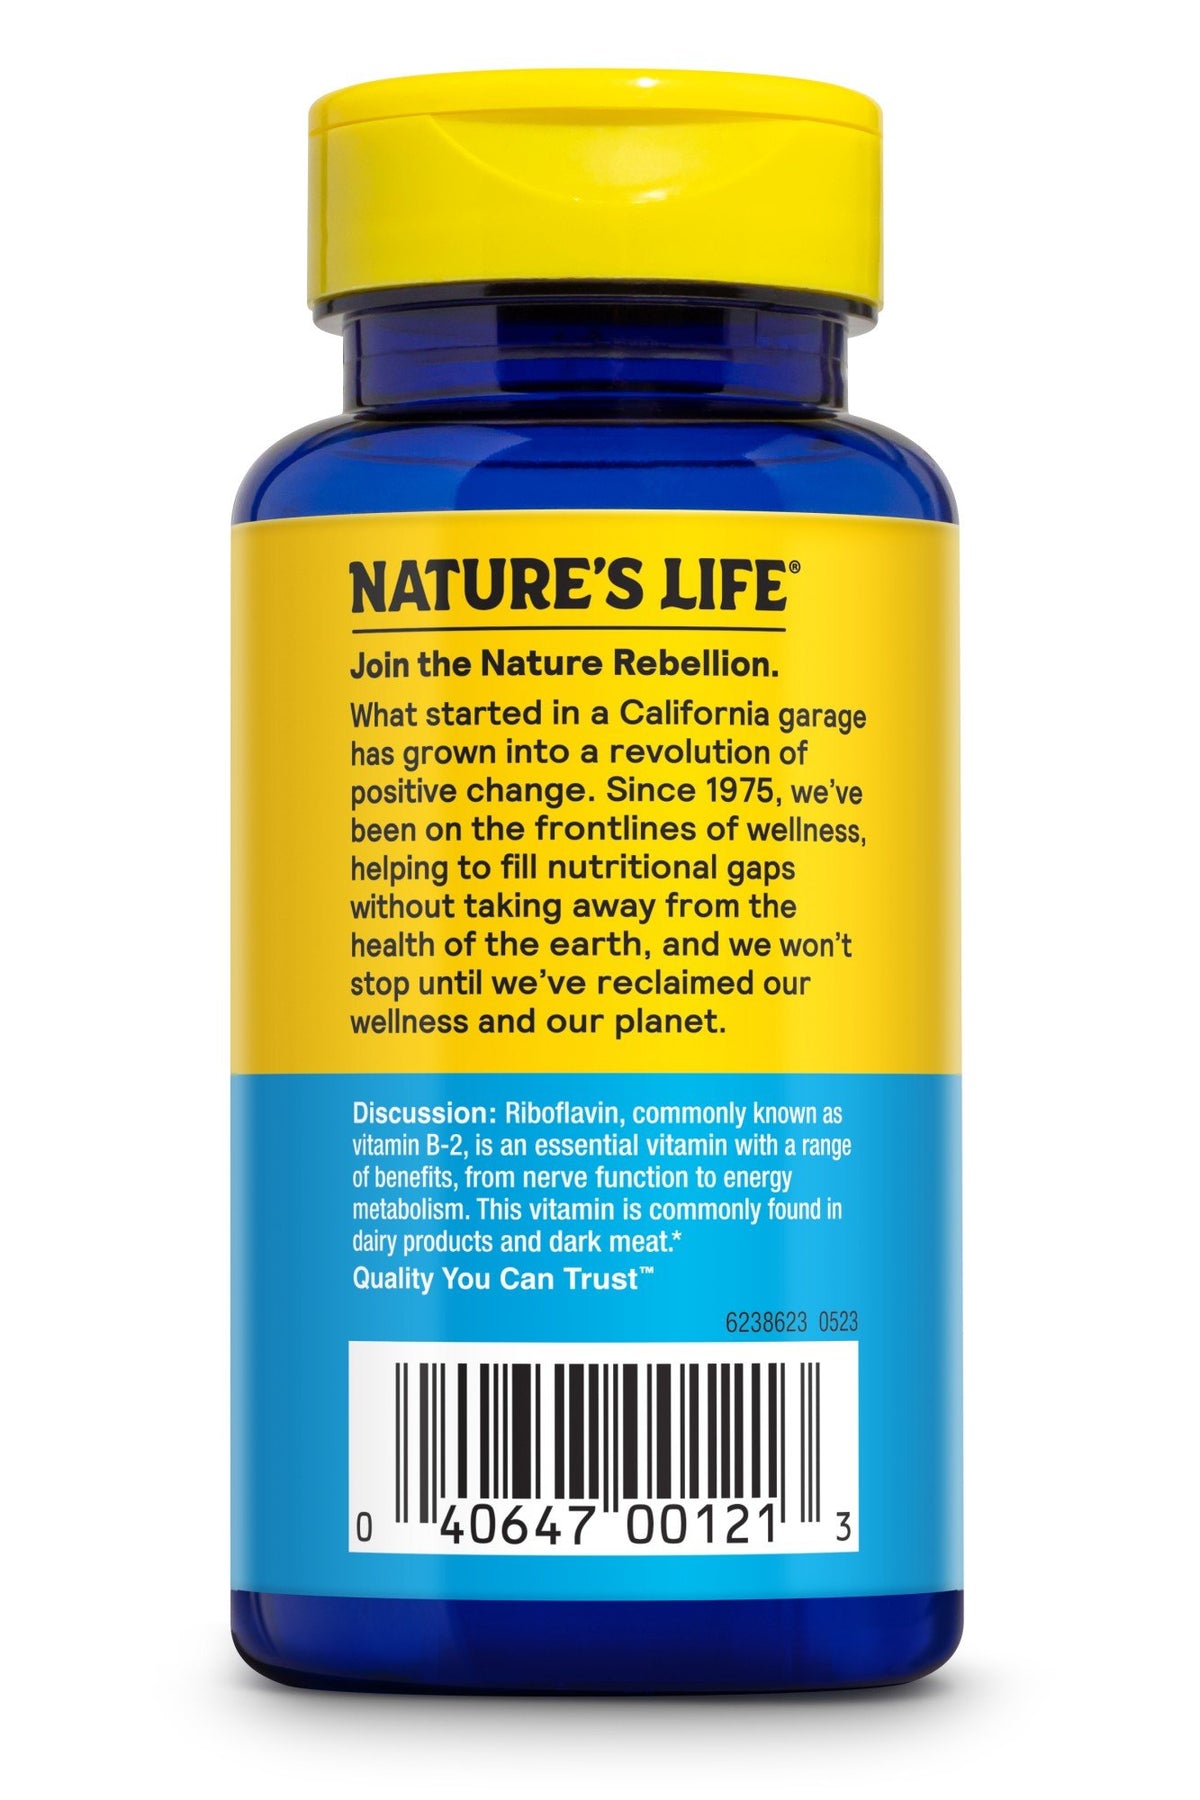 Natures Life Vitamin B-2 250mg - Vegetarian, Yeast-Free 50 Tablet